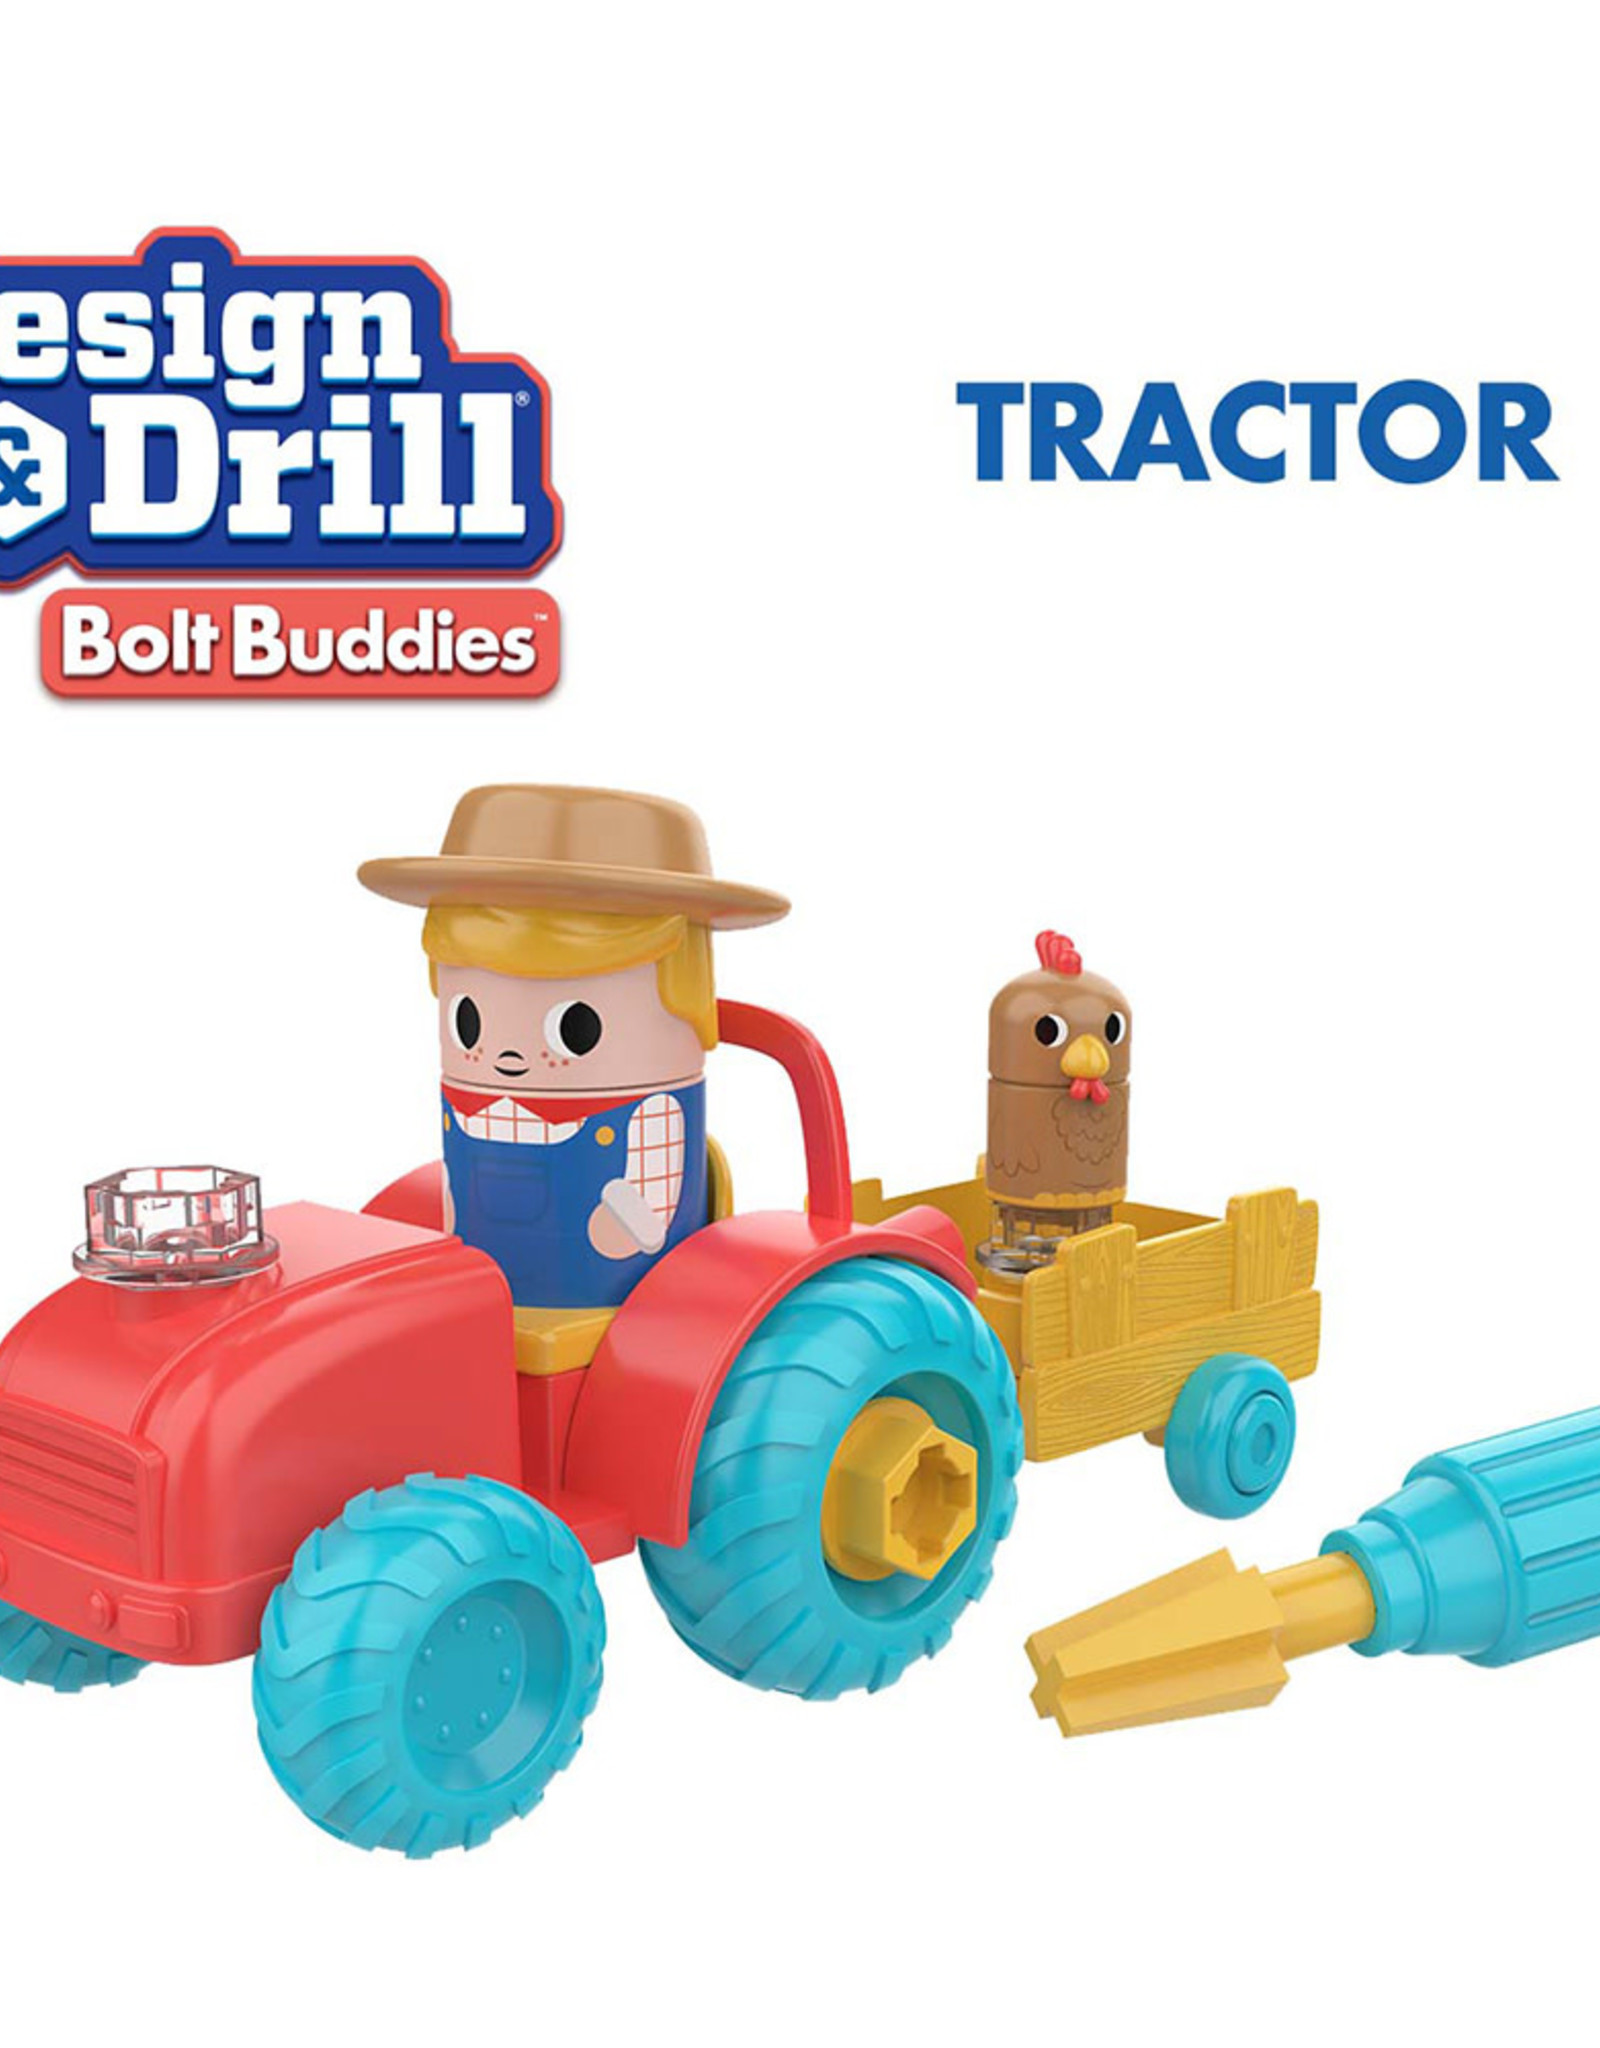 Playwell Design & Drill Bolt Buddies Tractor